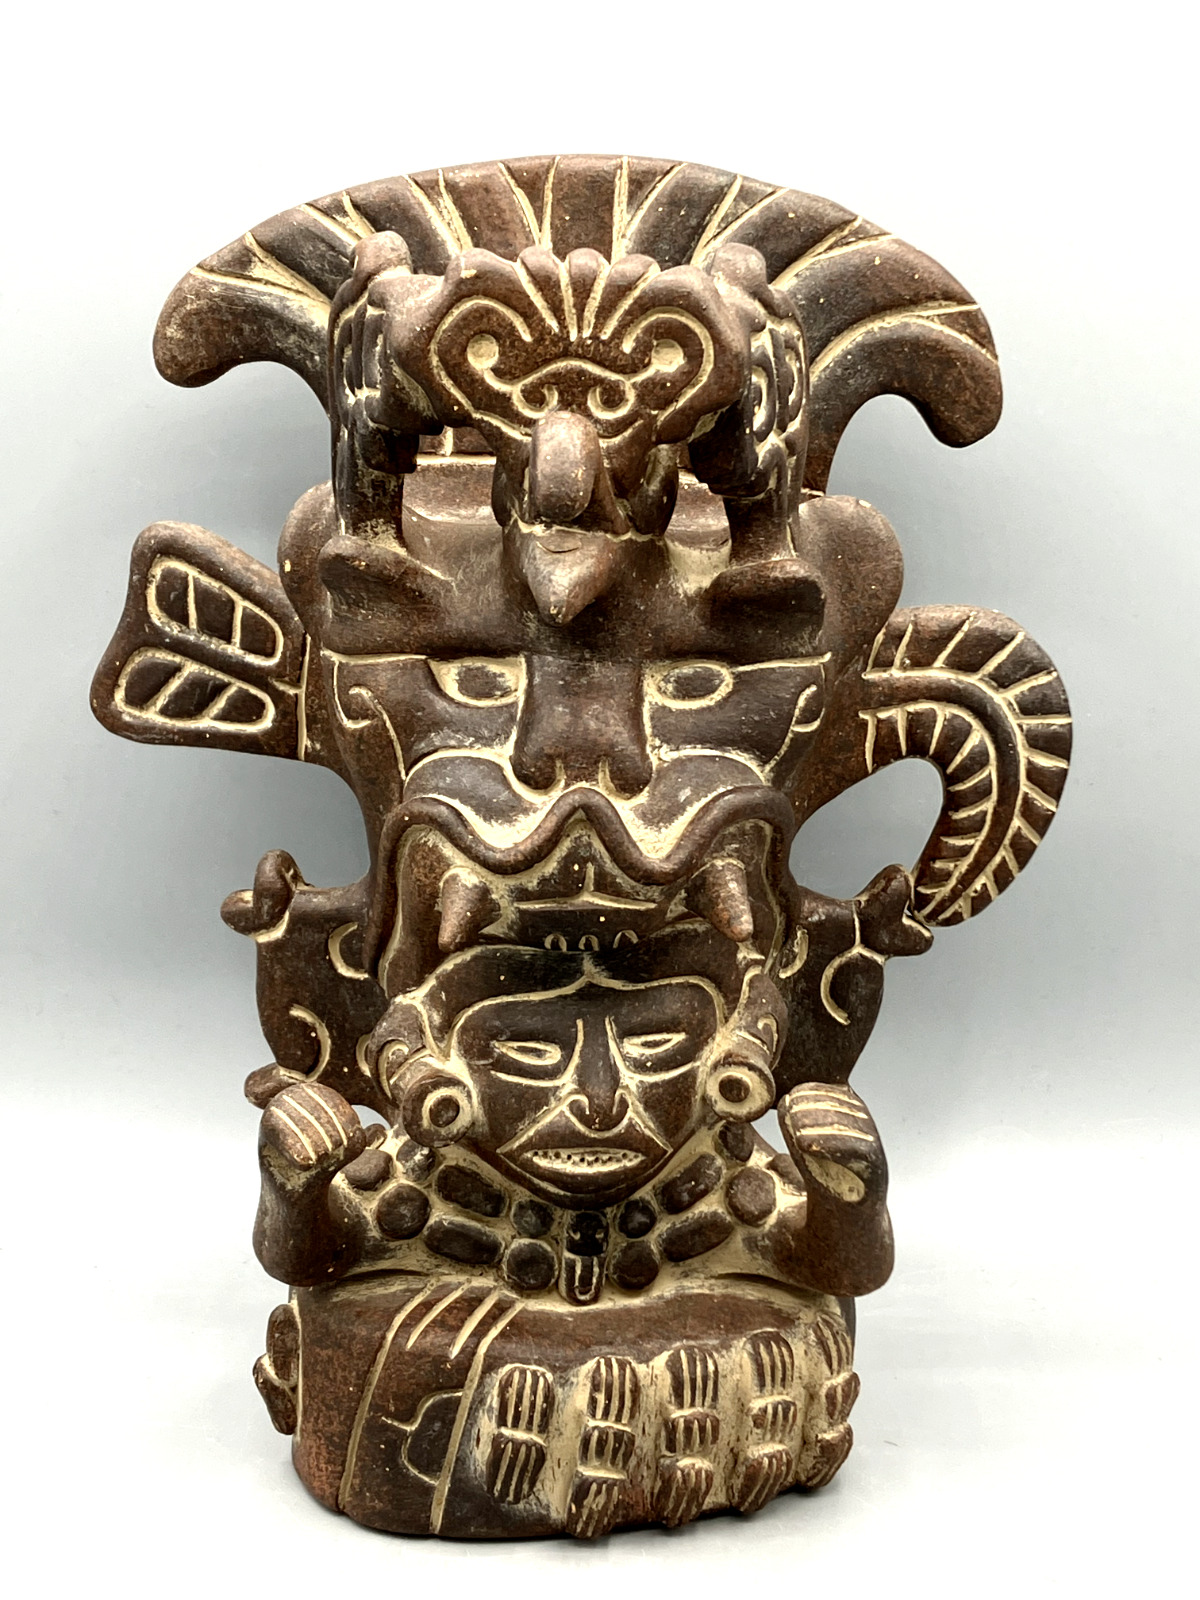 Vintage Mexican Terracotta Figure of Aztec or Mayan Gods & Legendary Figures